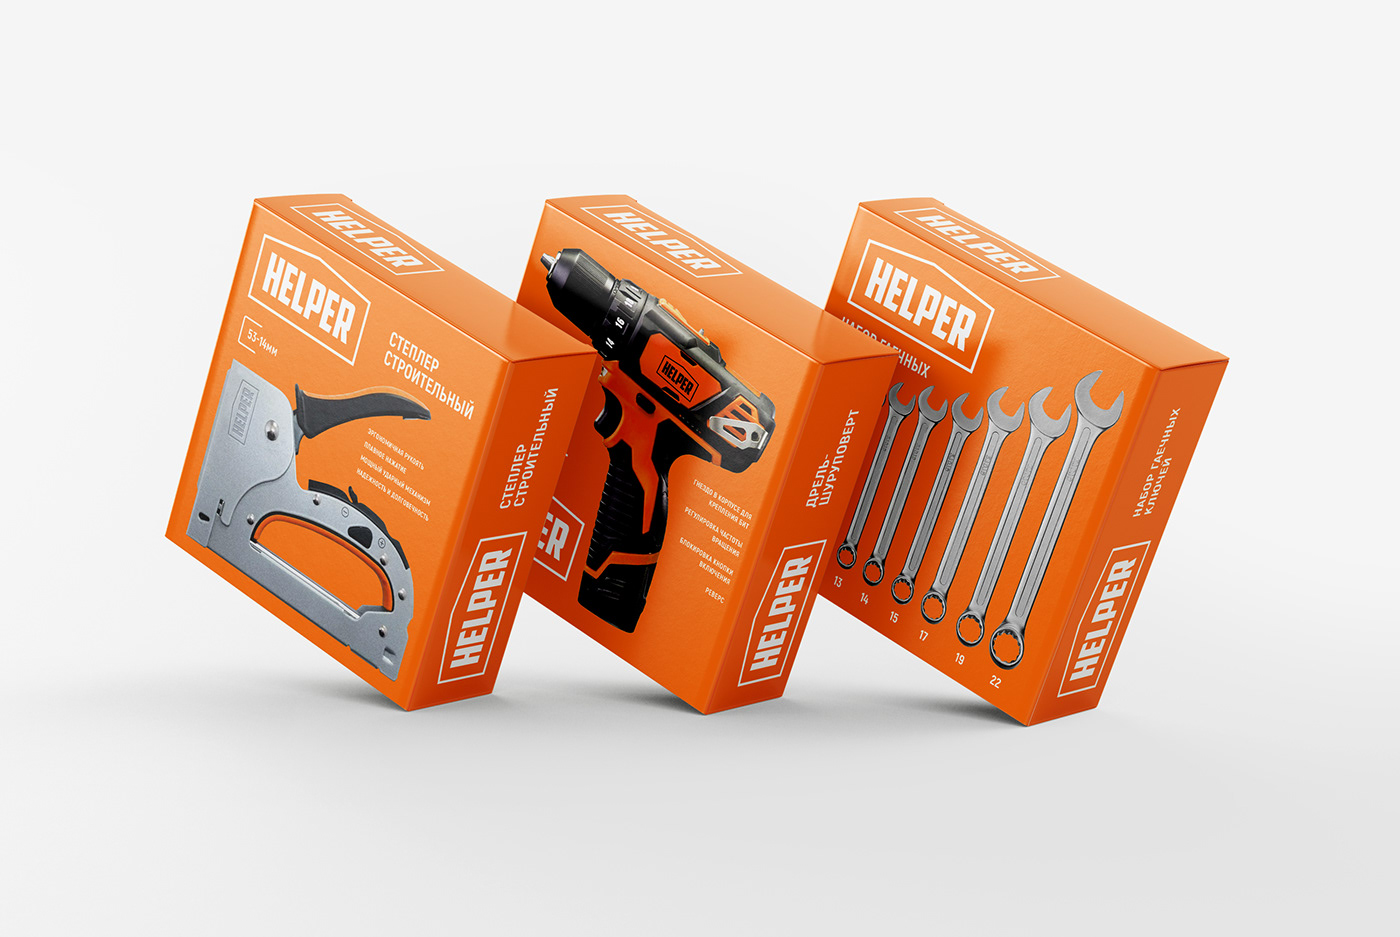 HELPER Tools packaging designed by Igor Kovalev